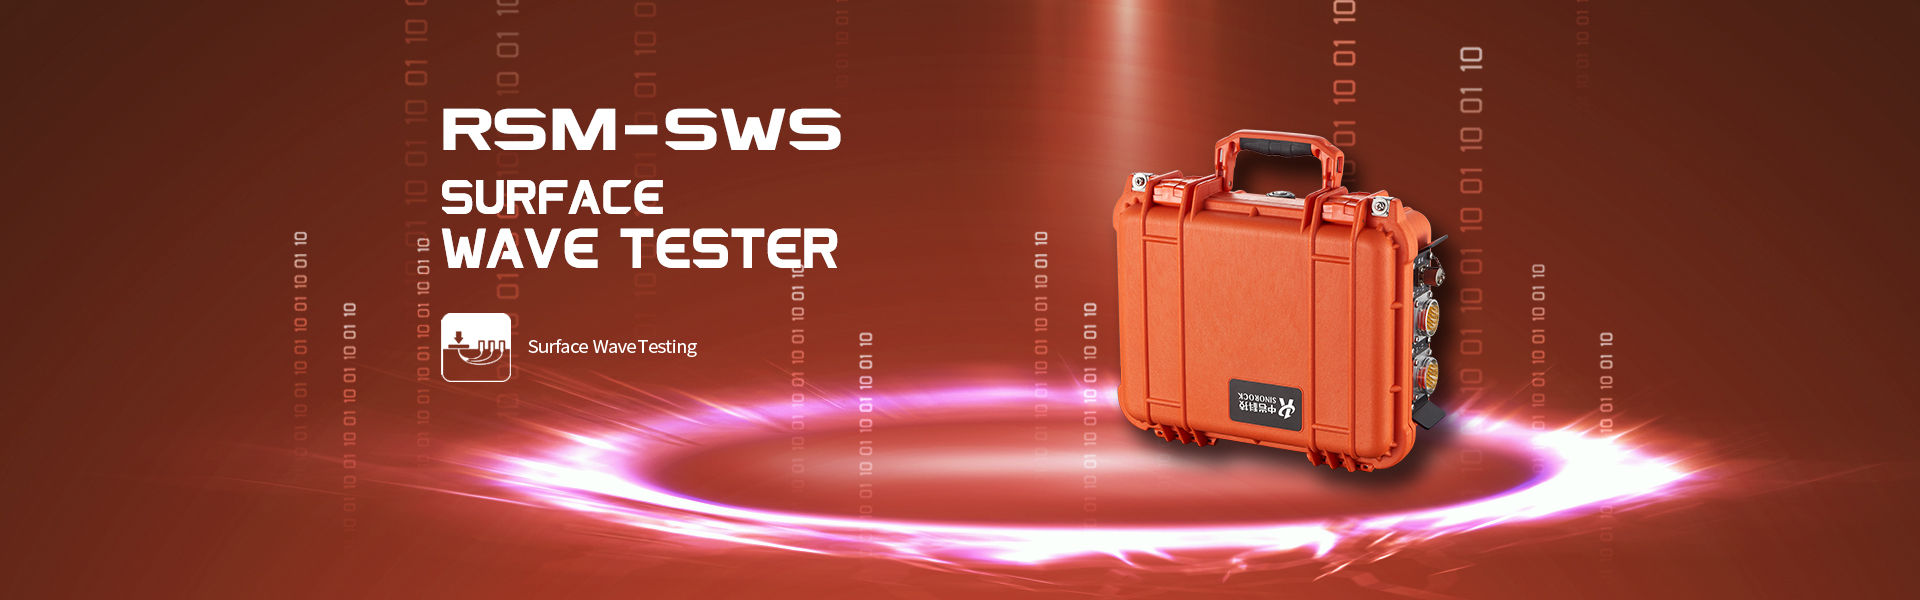 RSM-SWS Surface Wave Tester